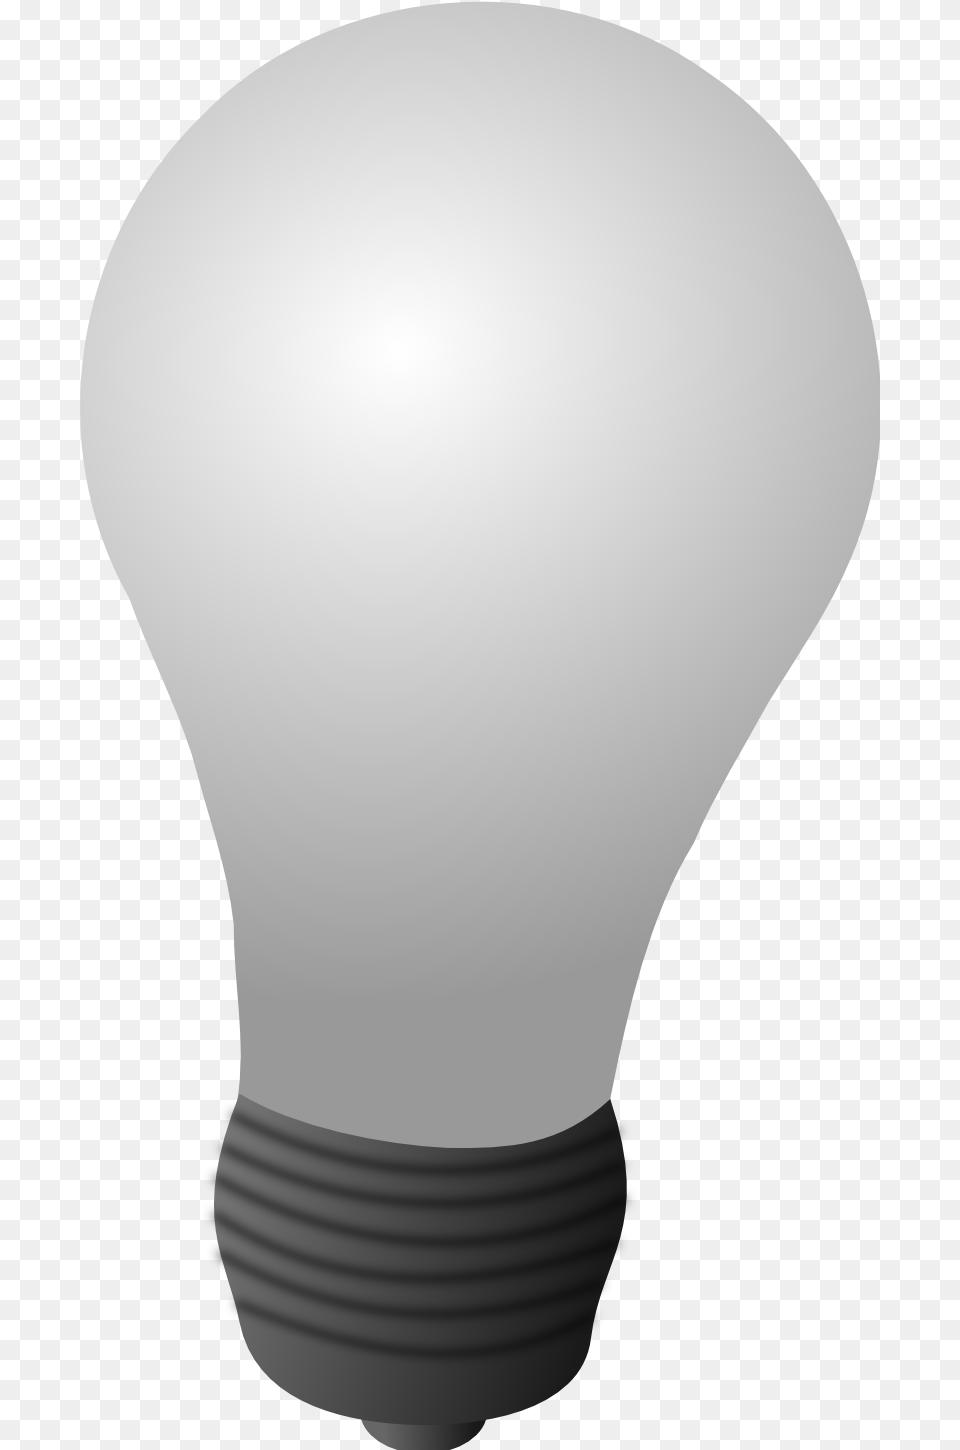 Bulb, Light, Lightbulb Free Png Download